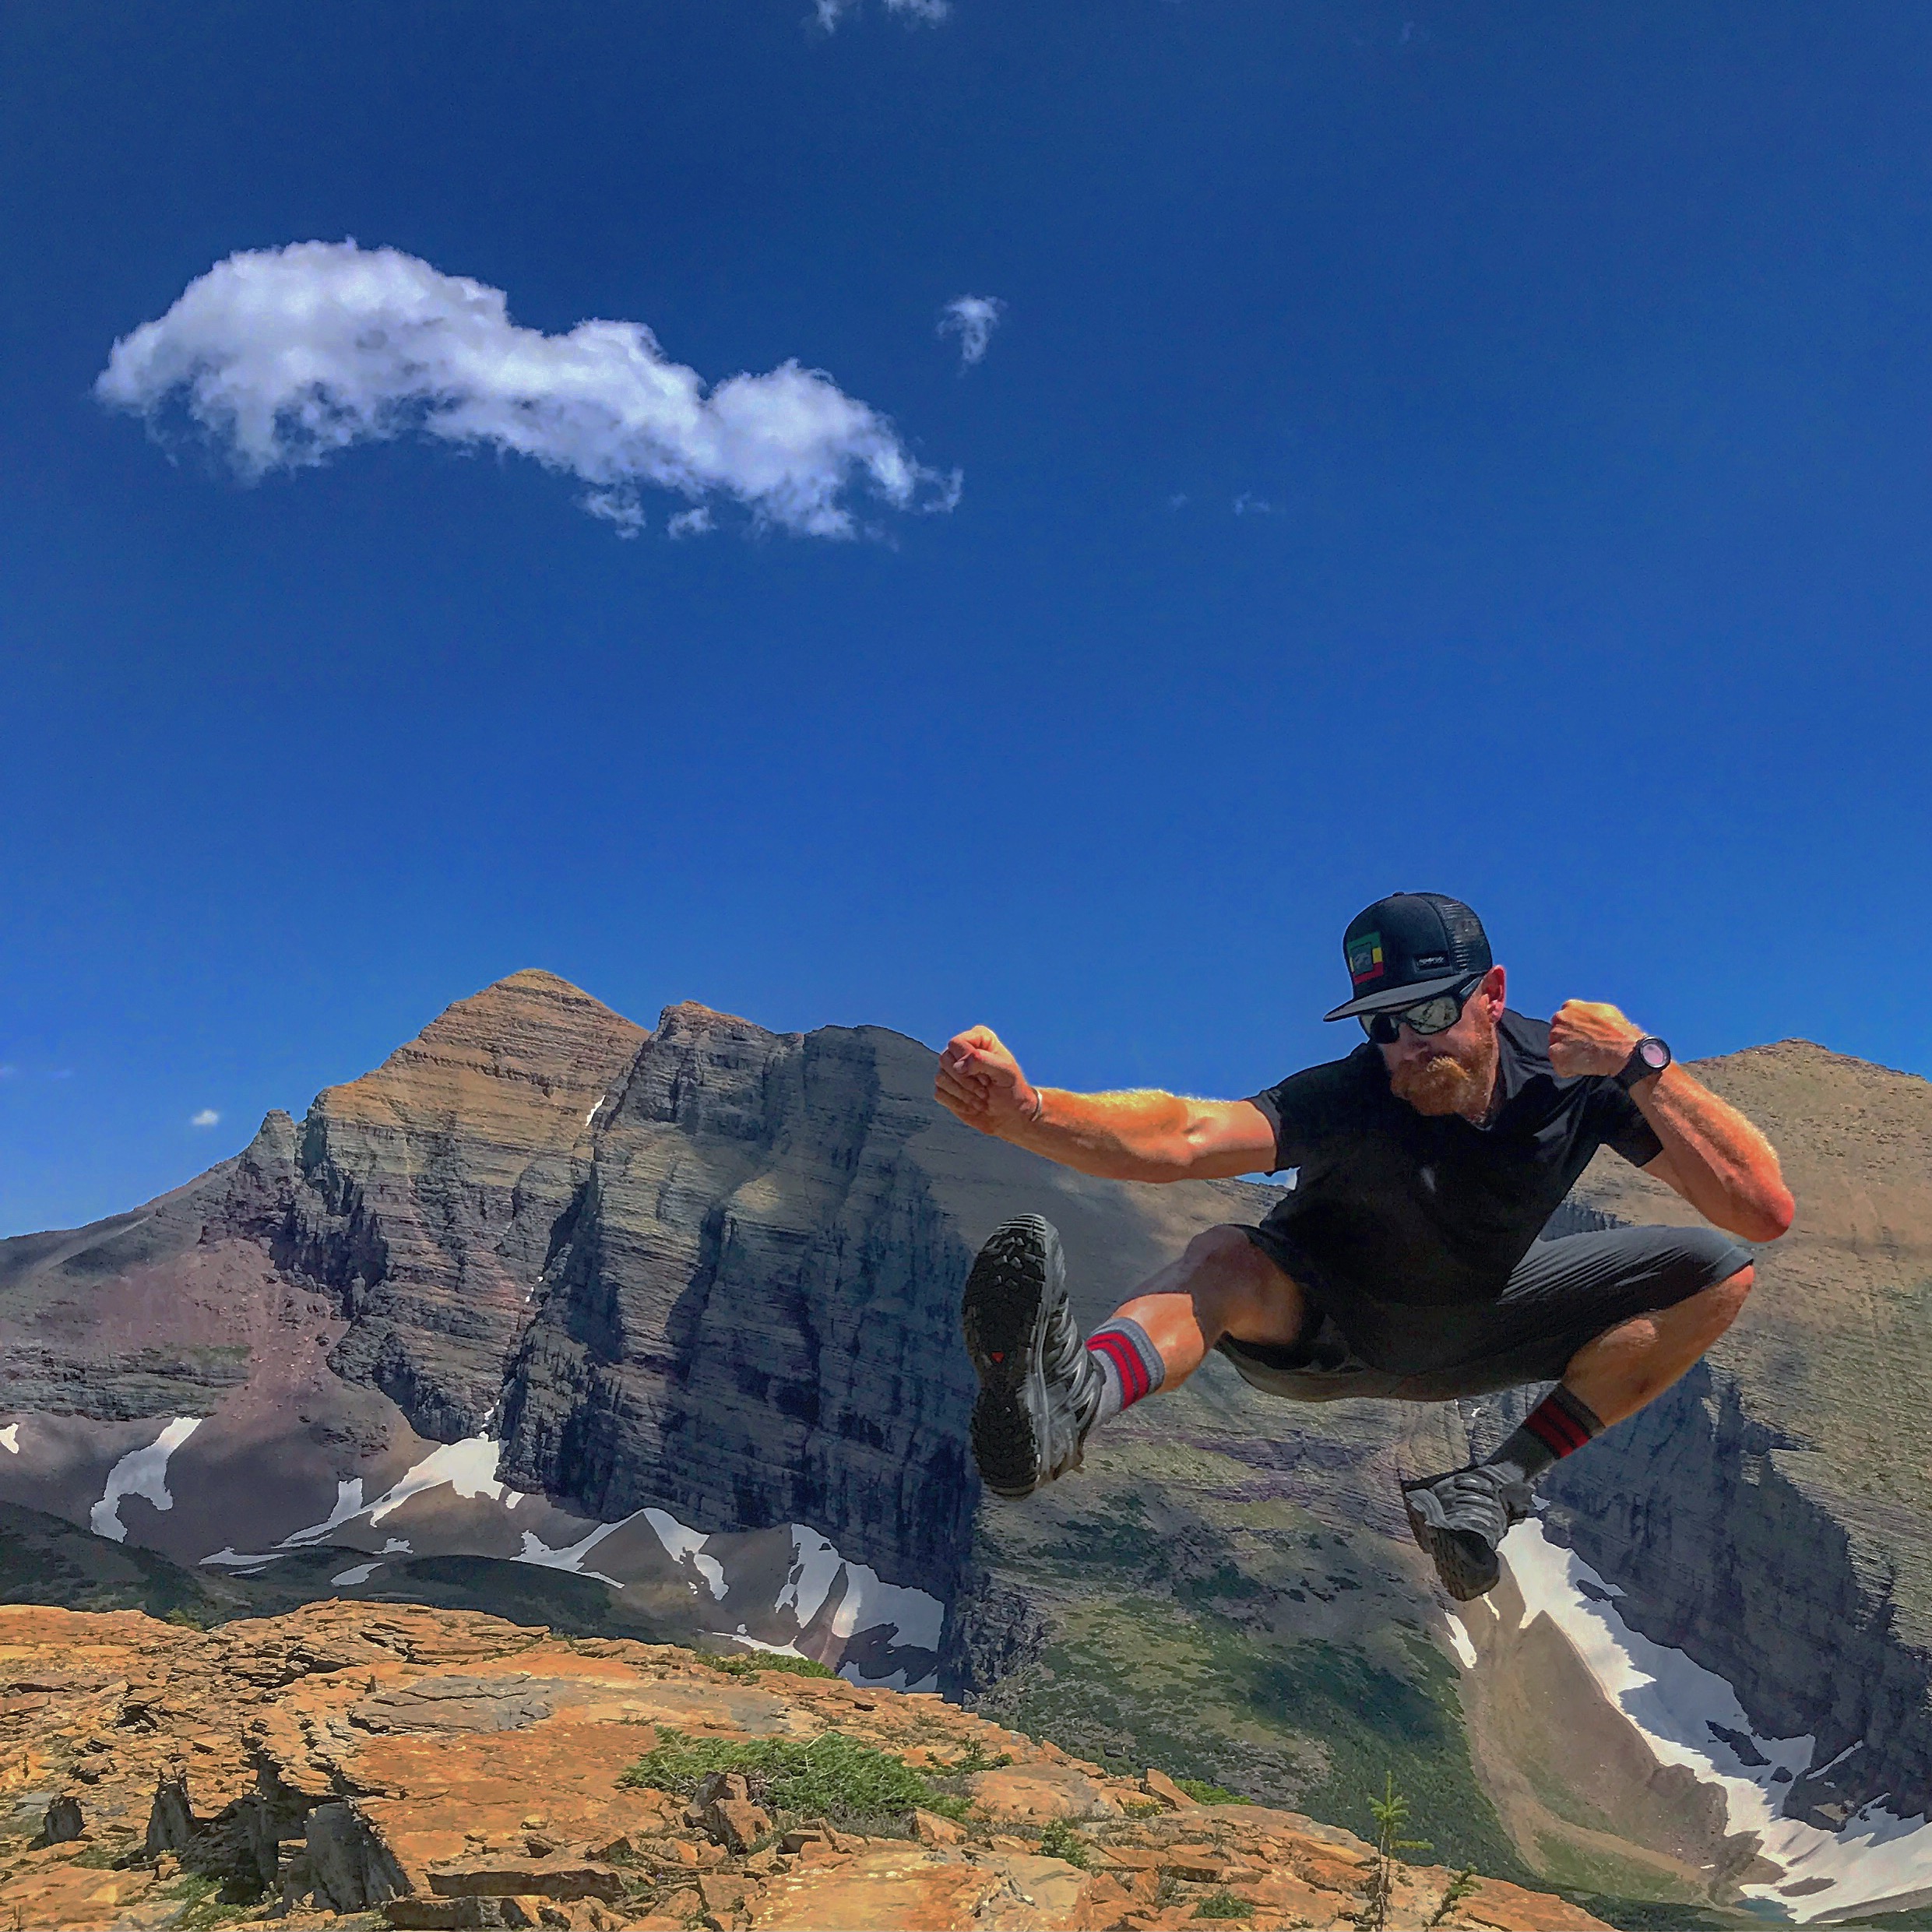 Donovan jumping for joy in Glacier National Park